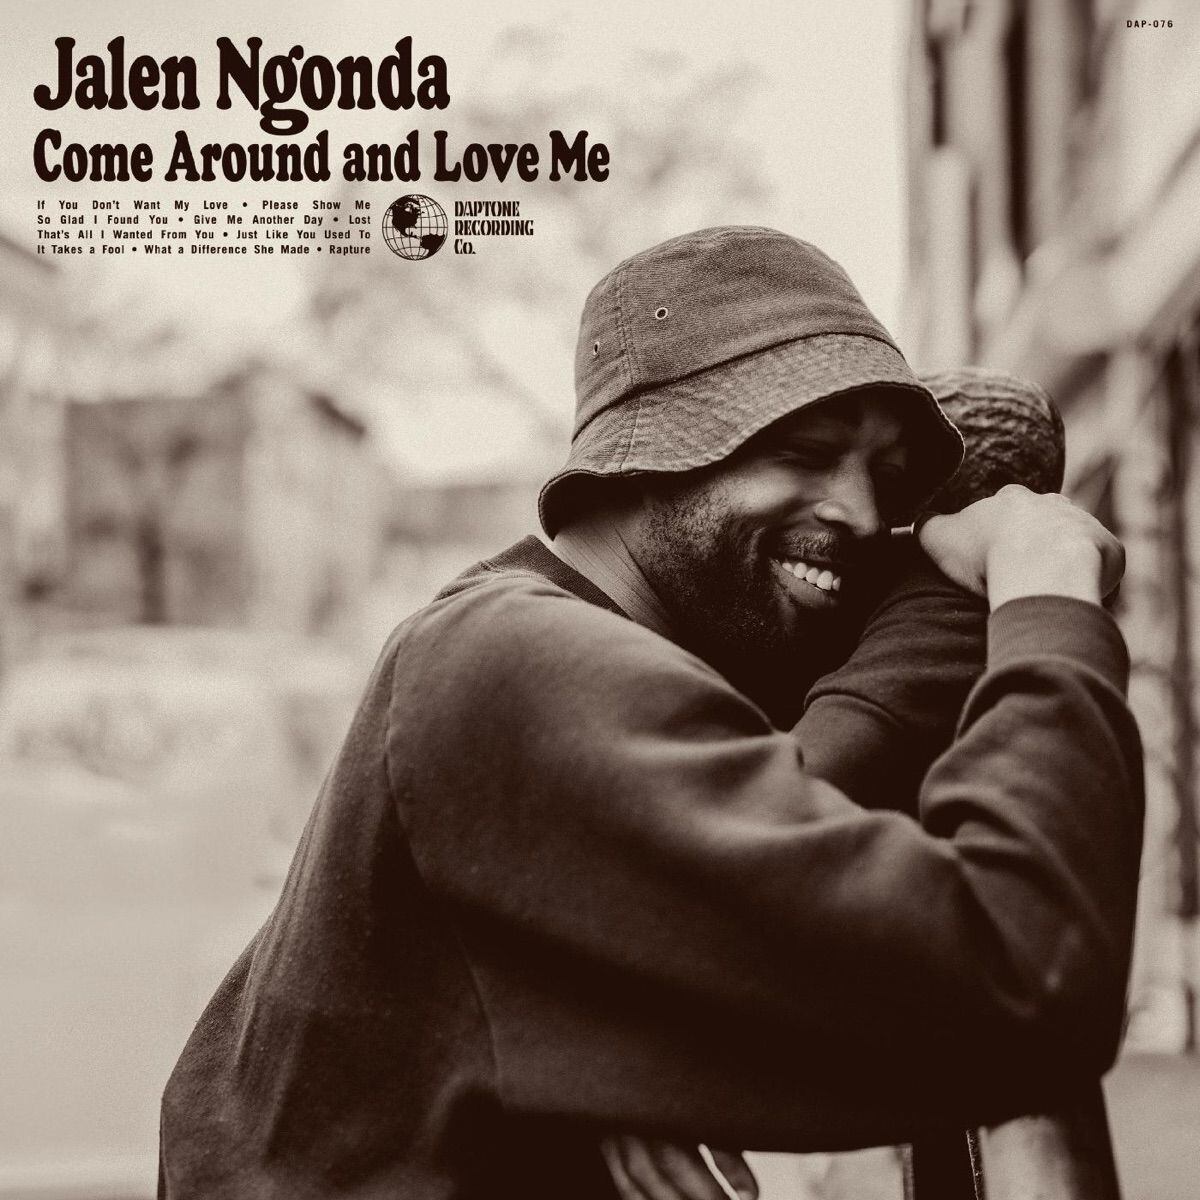 Portada del disco 'Come Around and Love Me’, de Jalen Ngonda.   